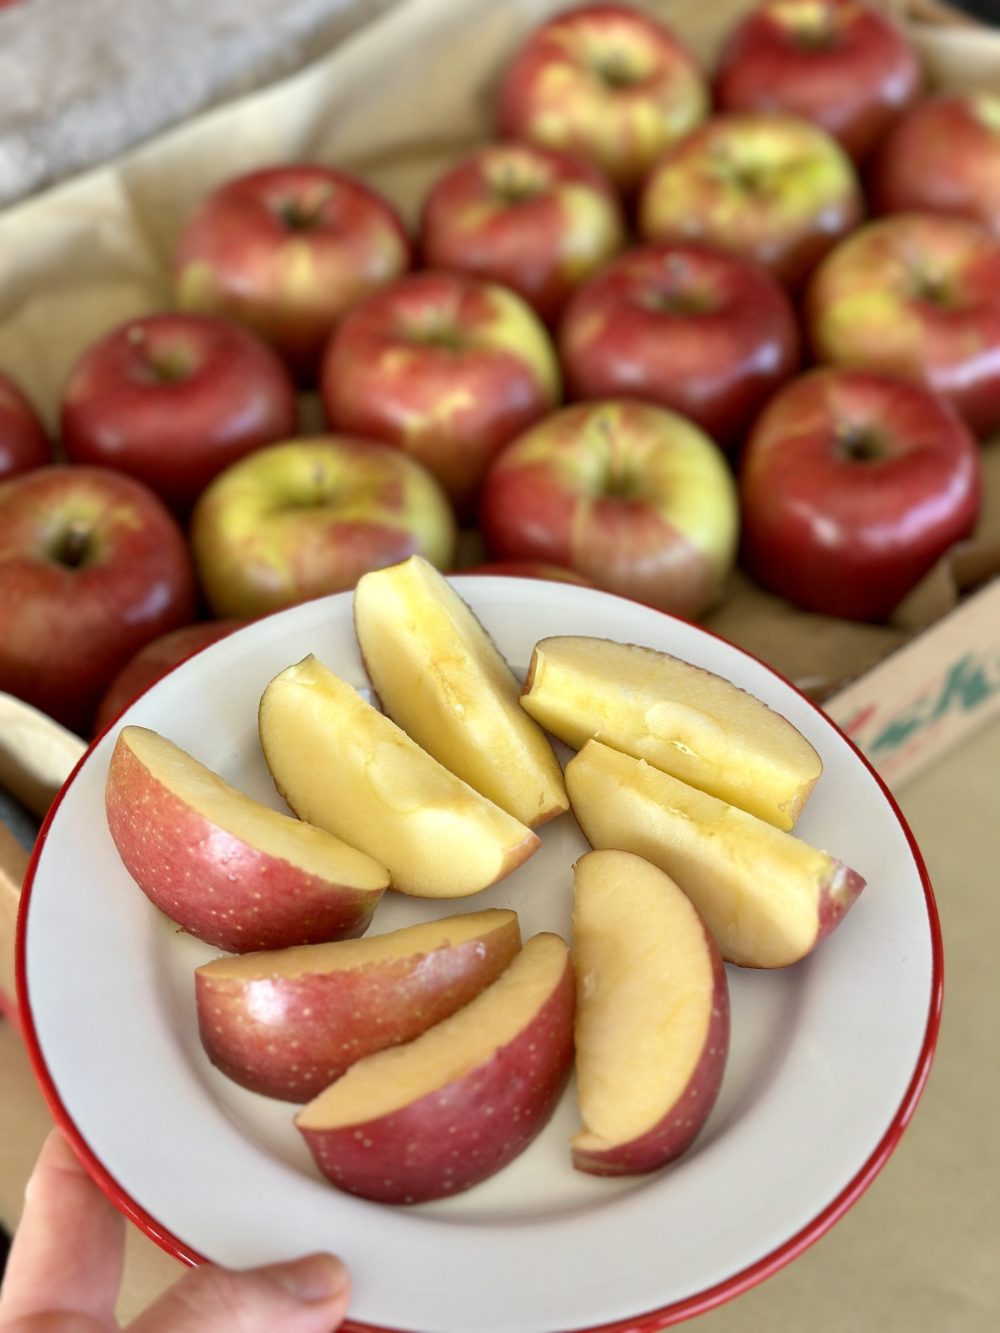 Hand-selected Evercrisp apples in a premium gift box